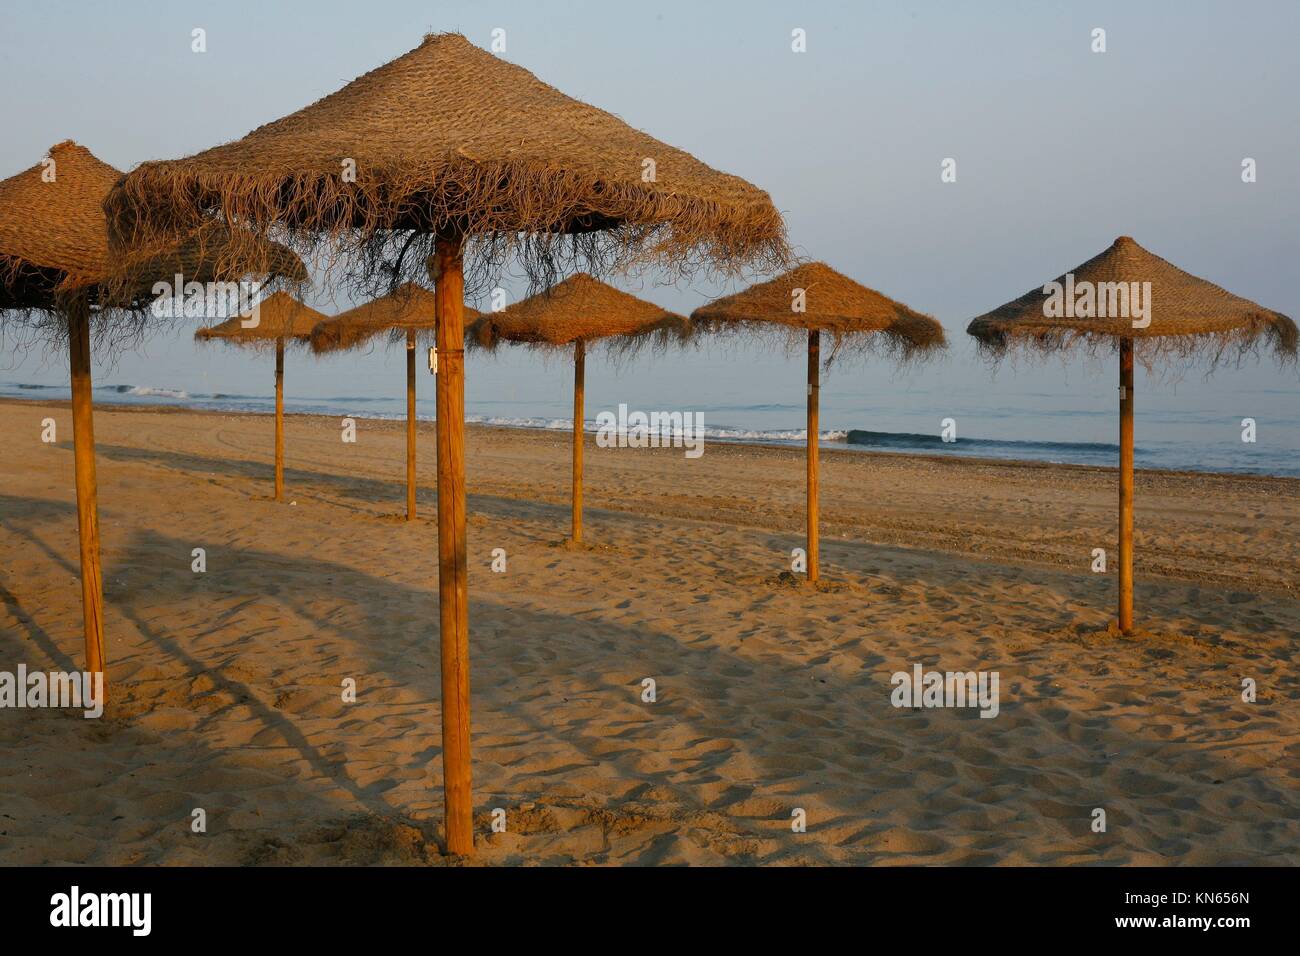 Rustic brown sun umbrellas made of natural fibers on a nice beach in Costa del Sol, Spain. Stock Photo